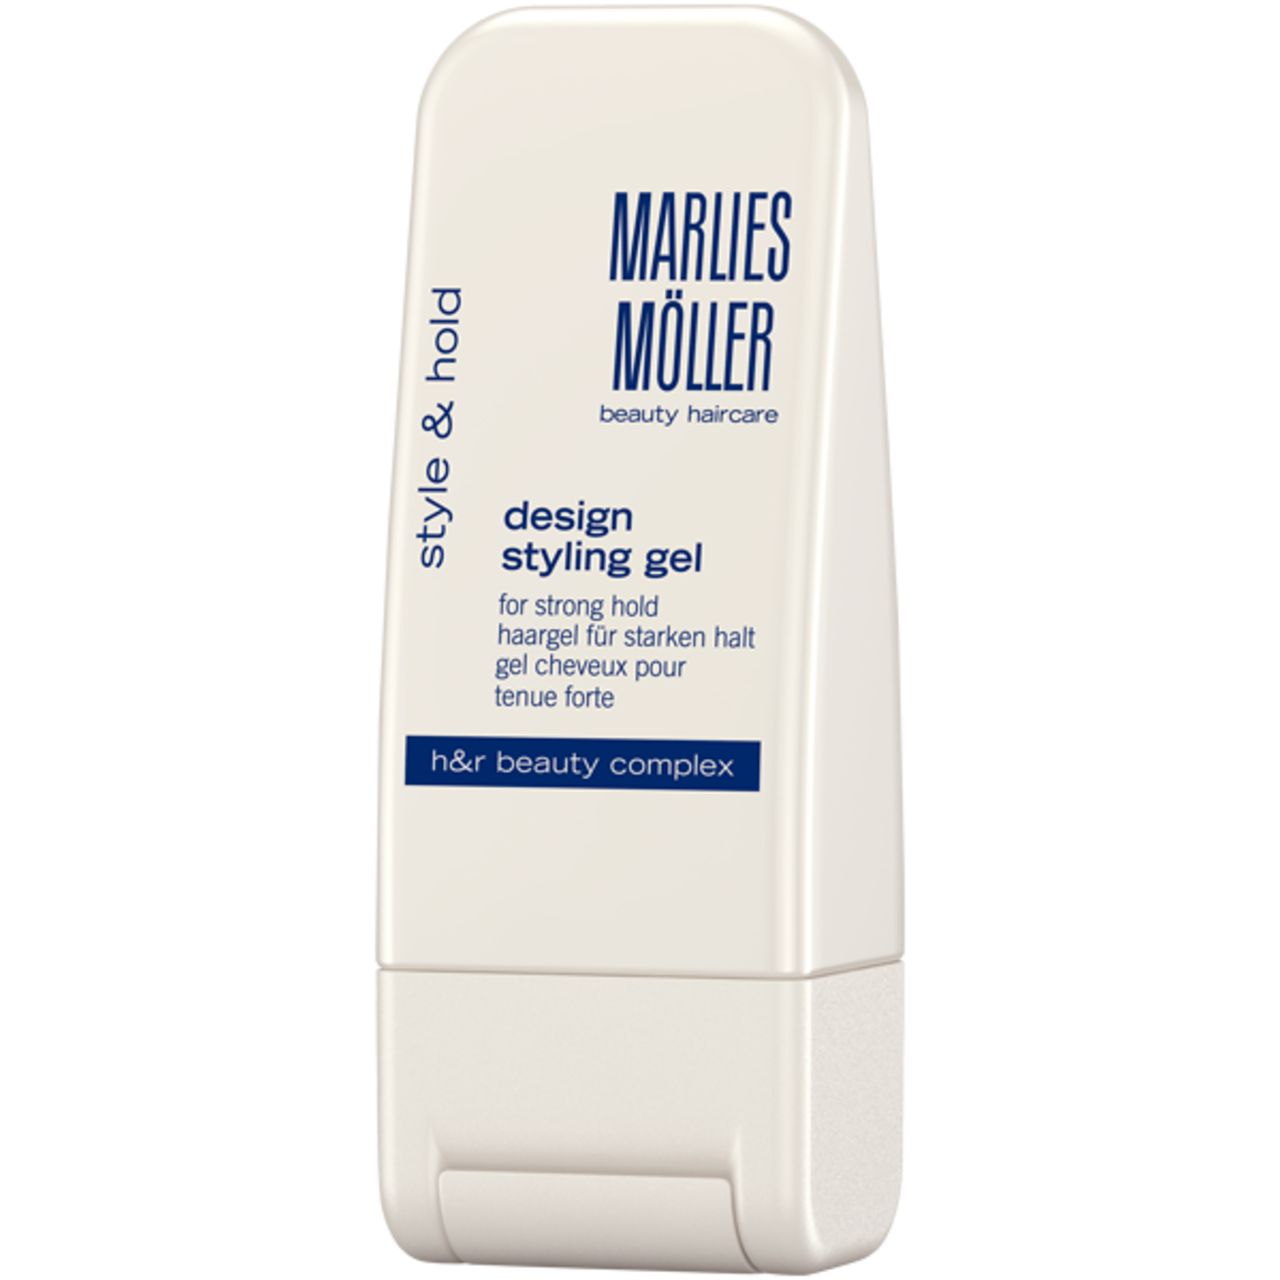 Marlies Möller beauty haircare Design Styling Hair Gel